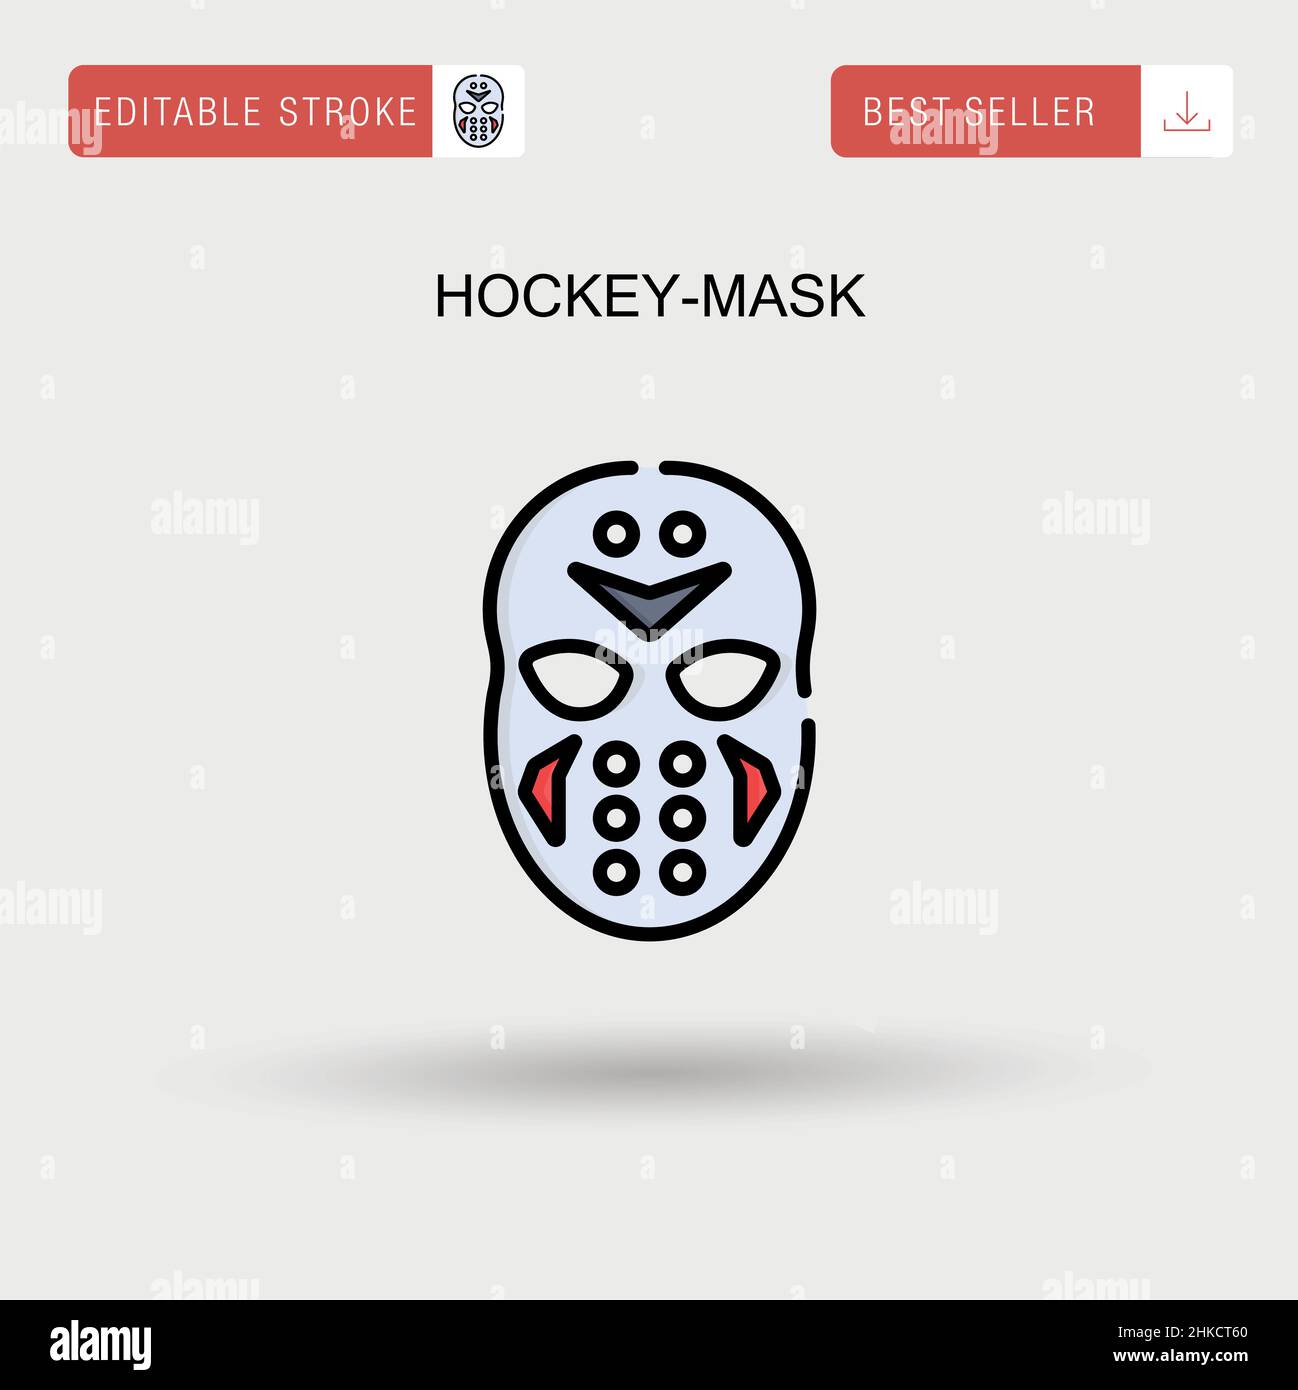 Hockey-mask Simple vector icon. Stock Vector